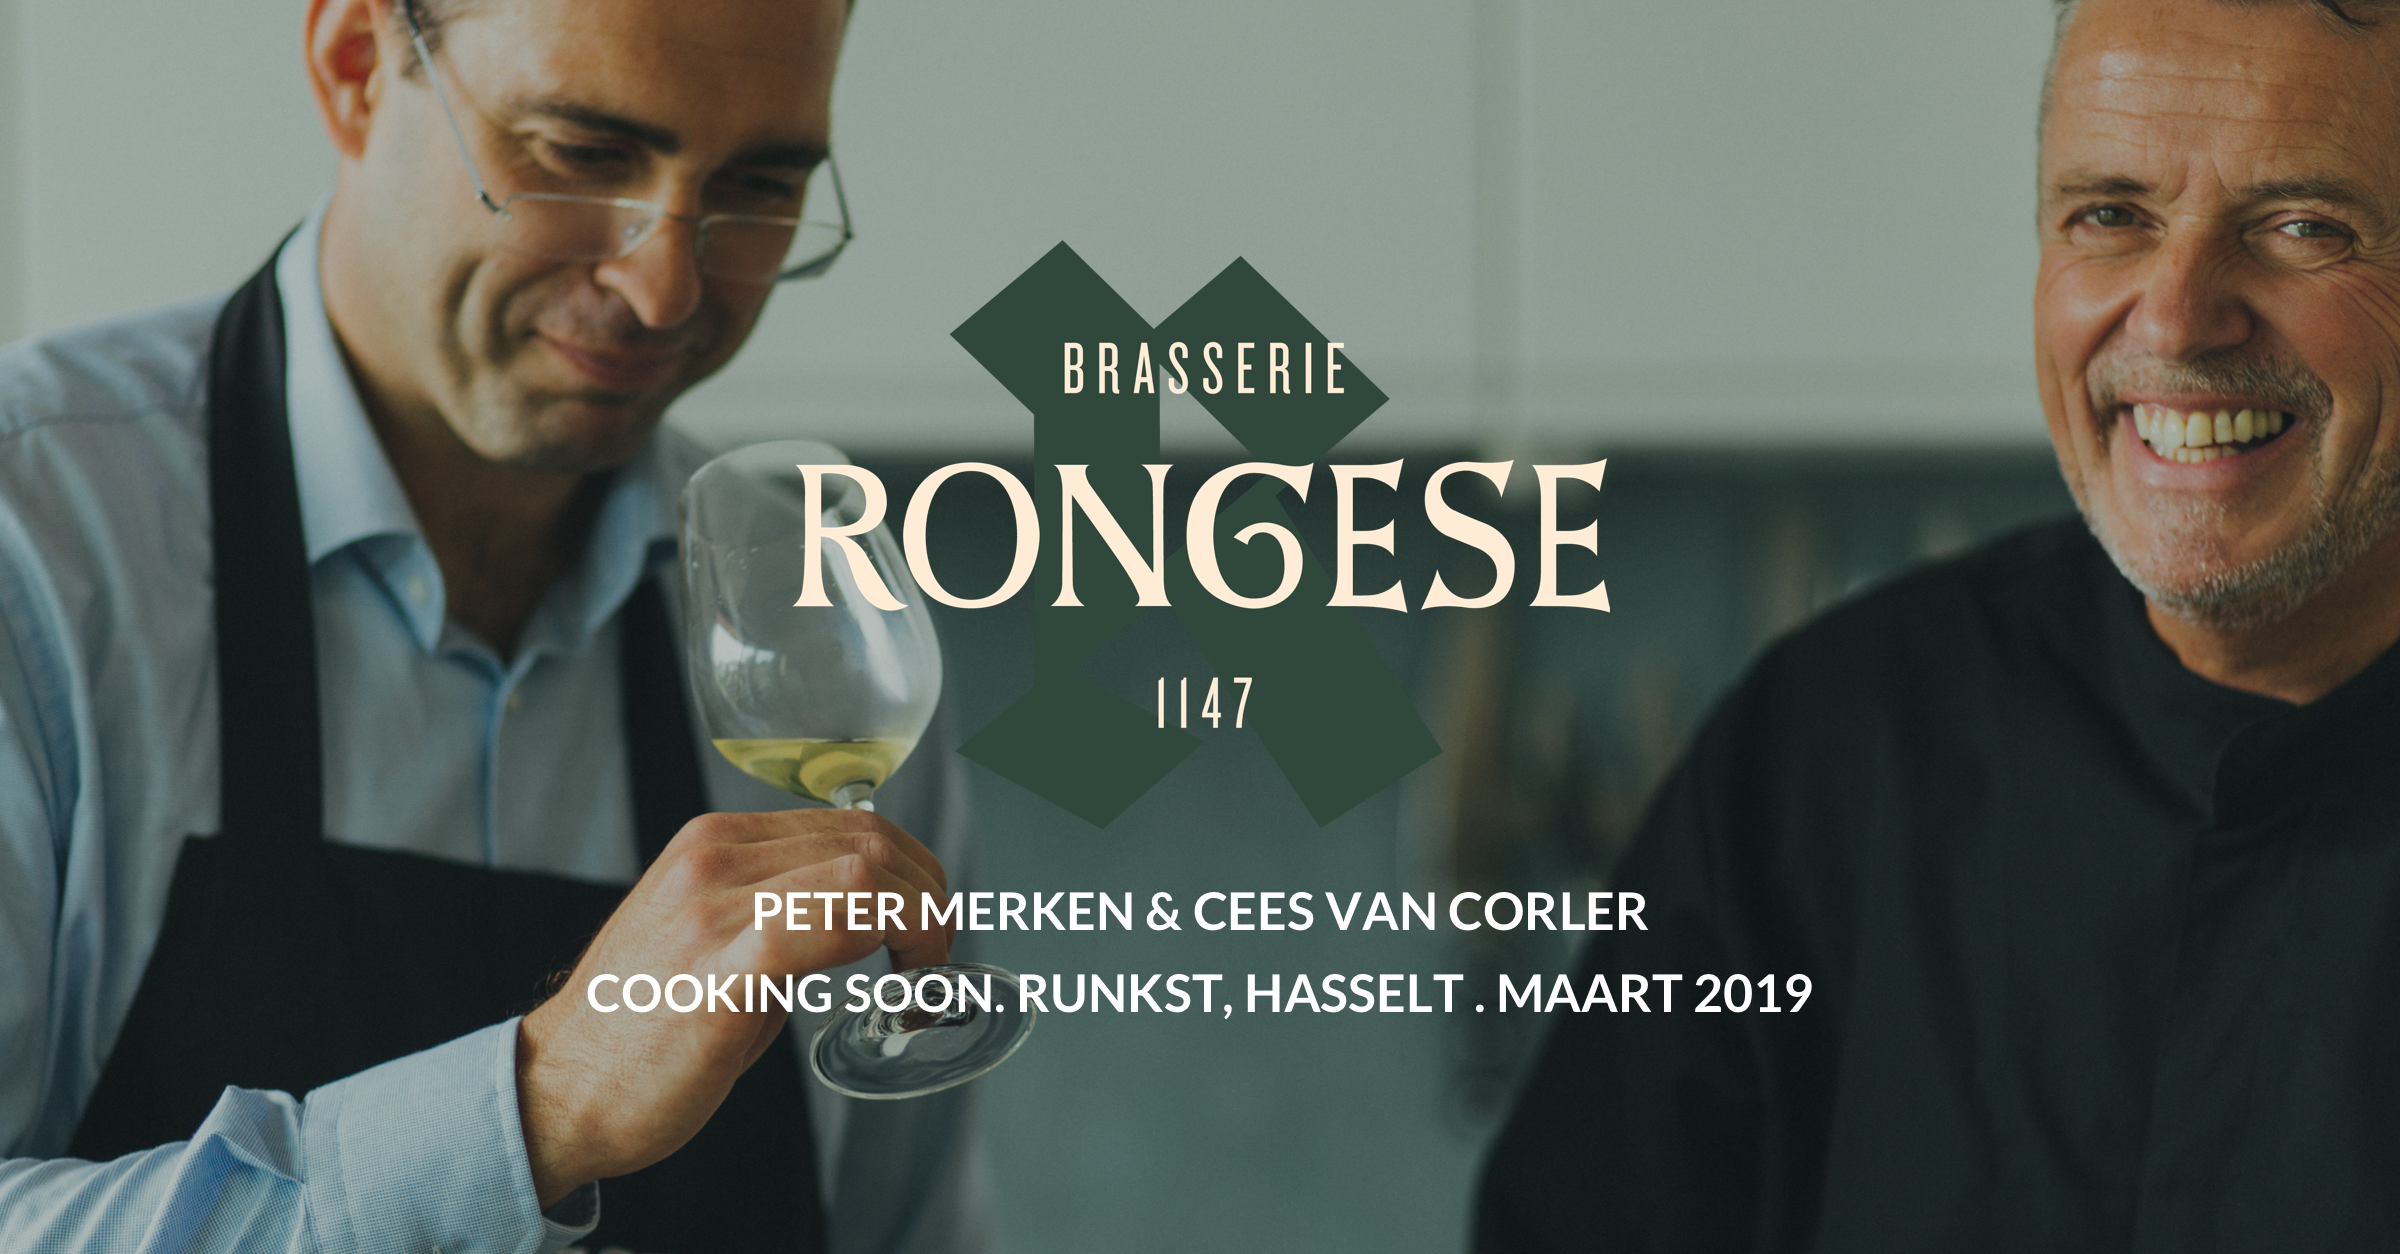 Brasserie Rongese - Peter Merken & Cees van Corler